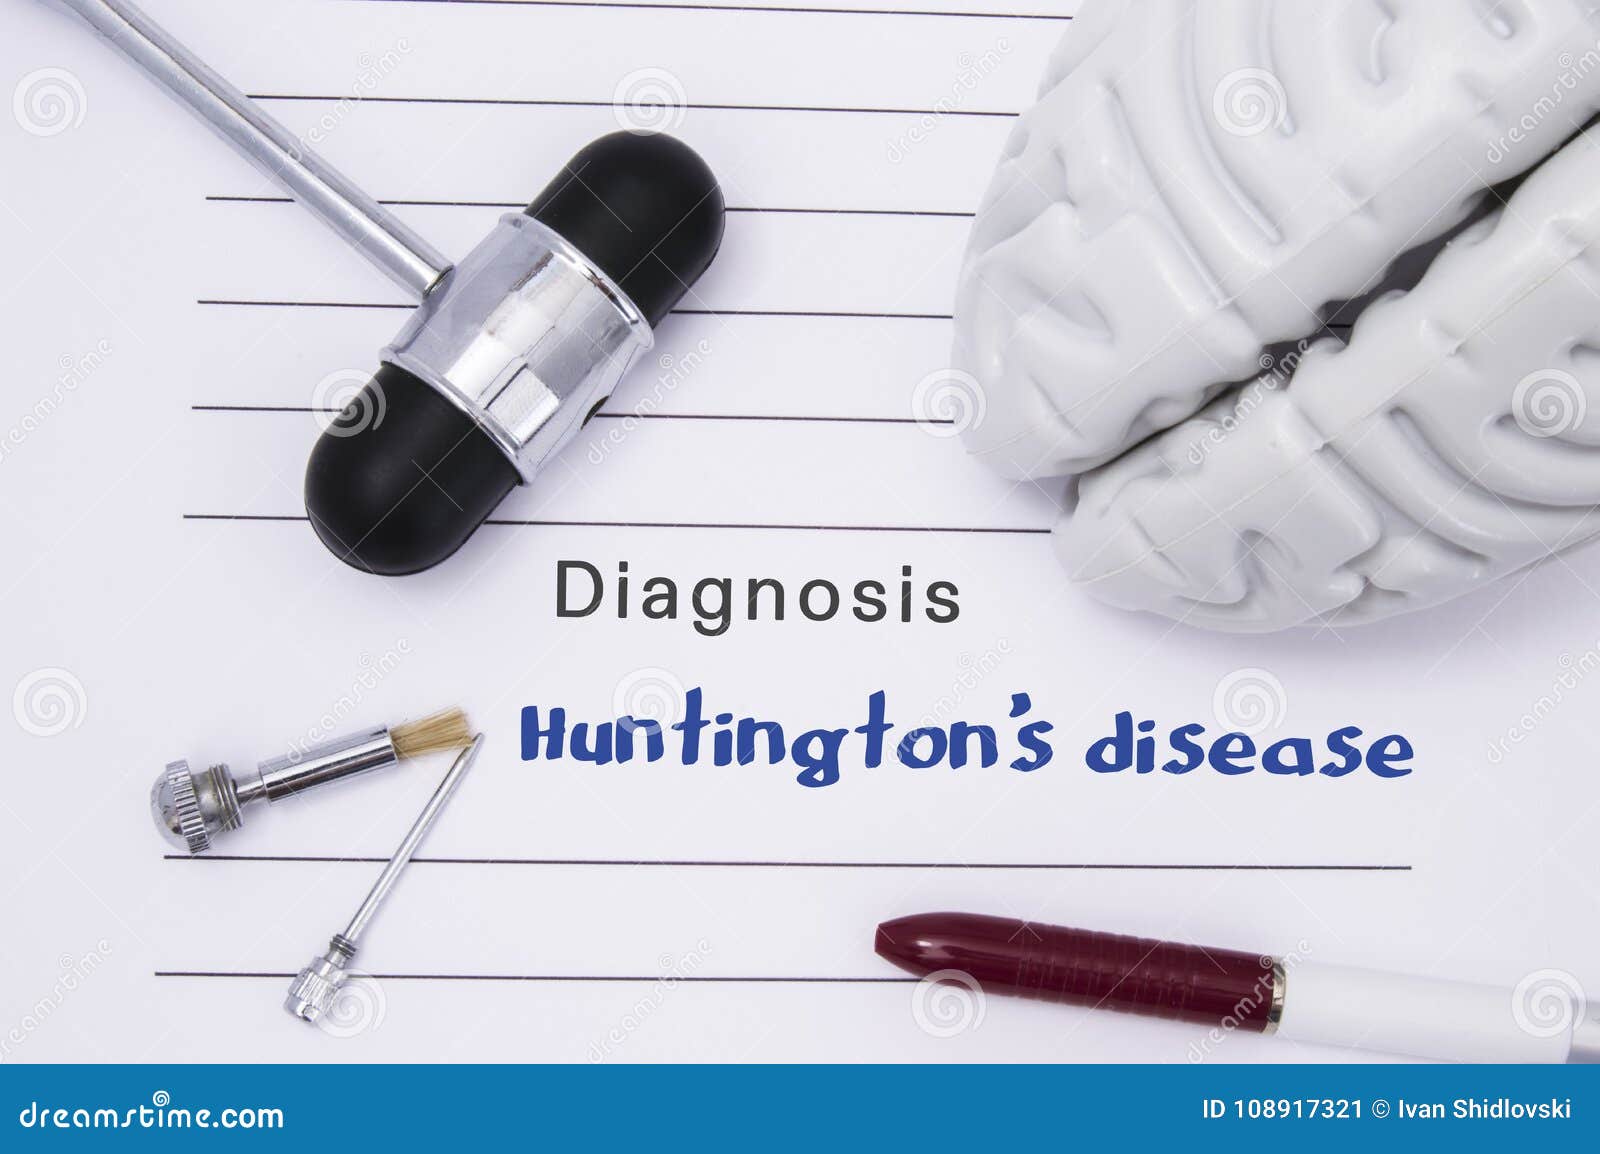 neurological diagnosis of huntington`s disease. neurological hammer, human brain figure, tools for sensitivity testing are on tabl